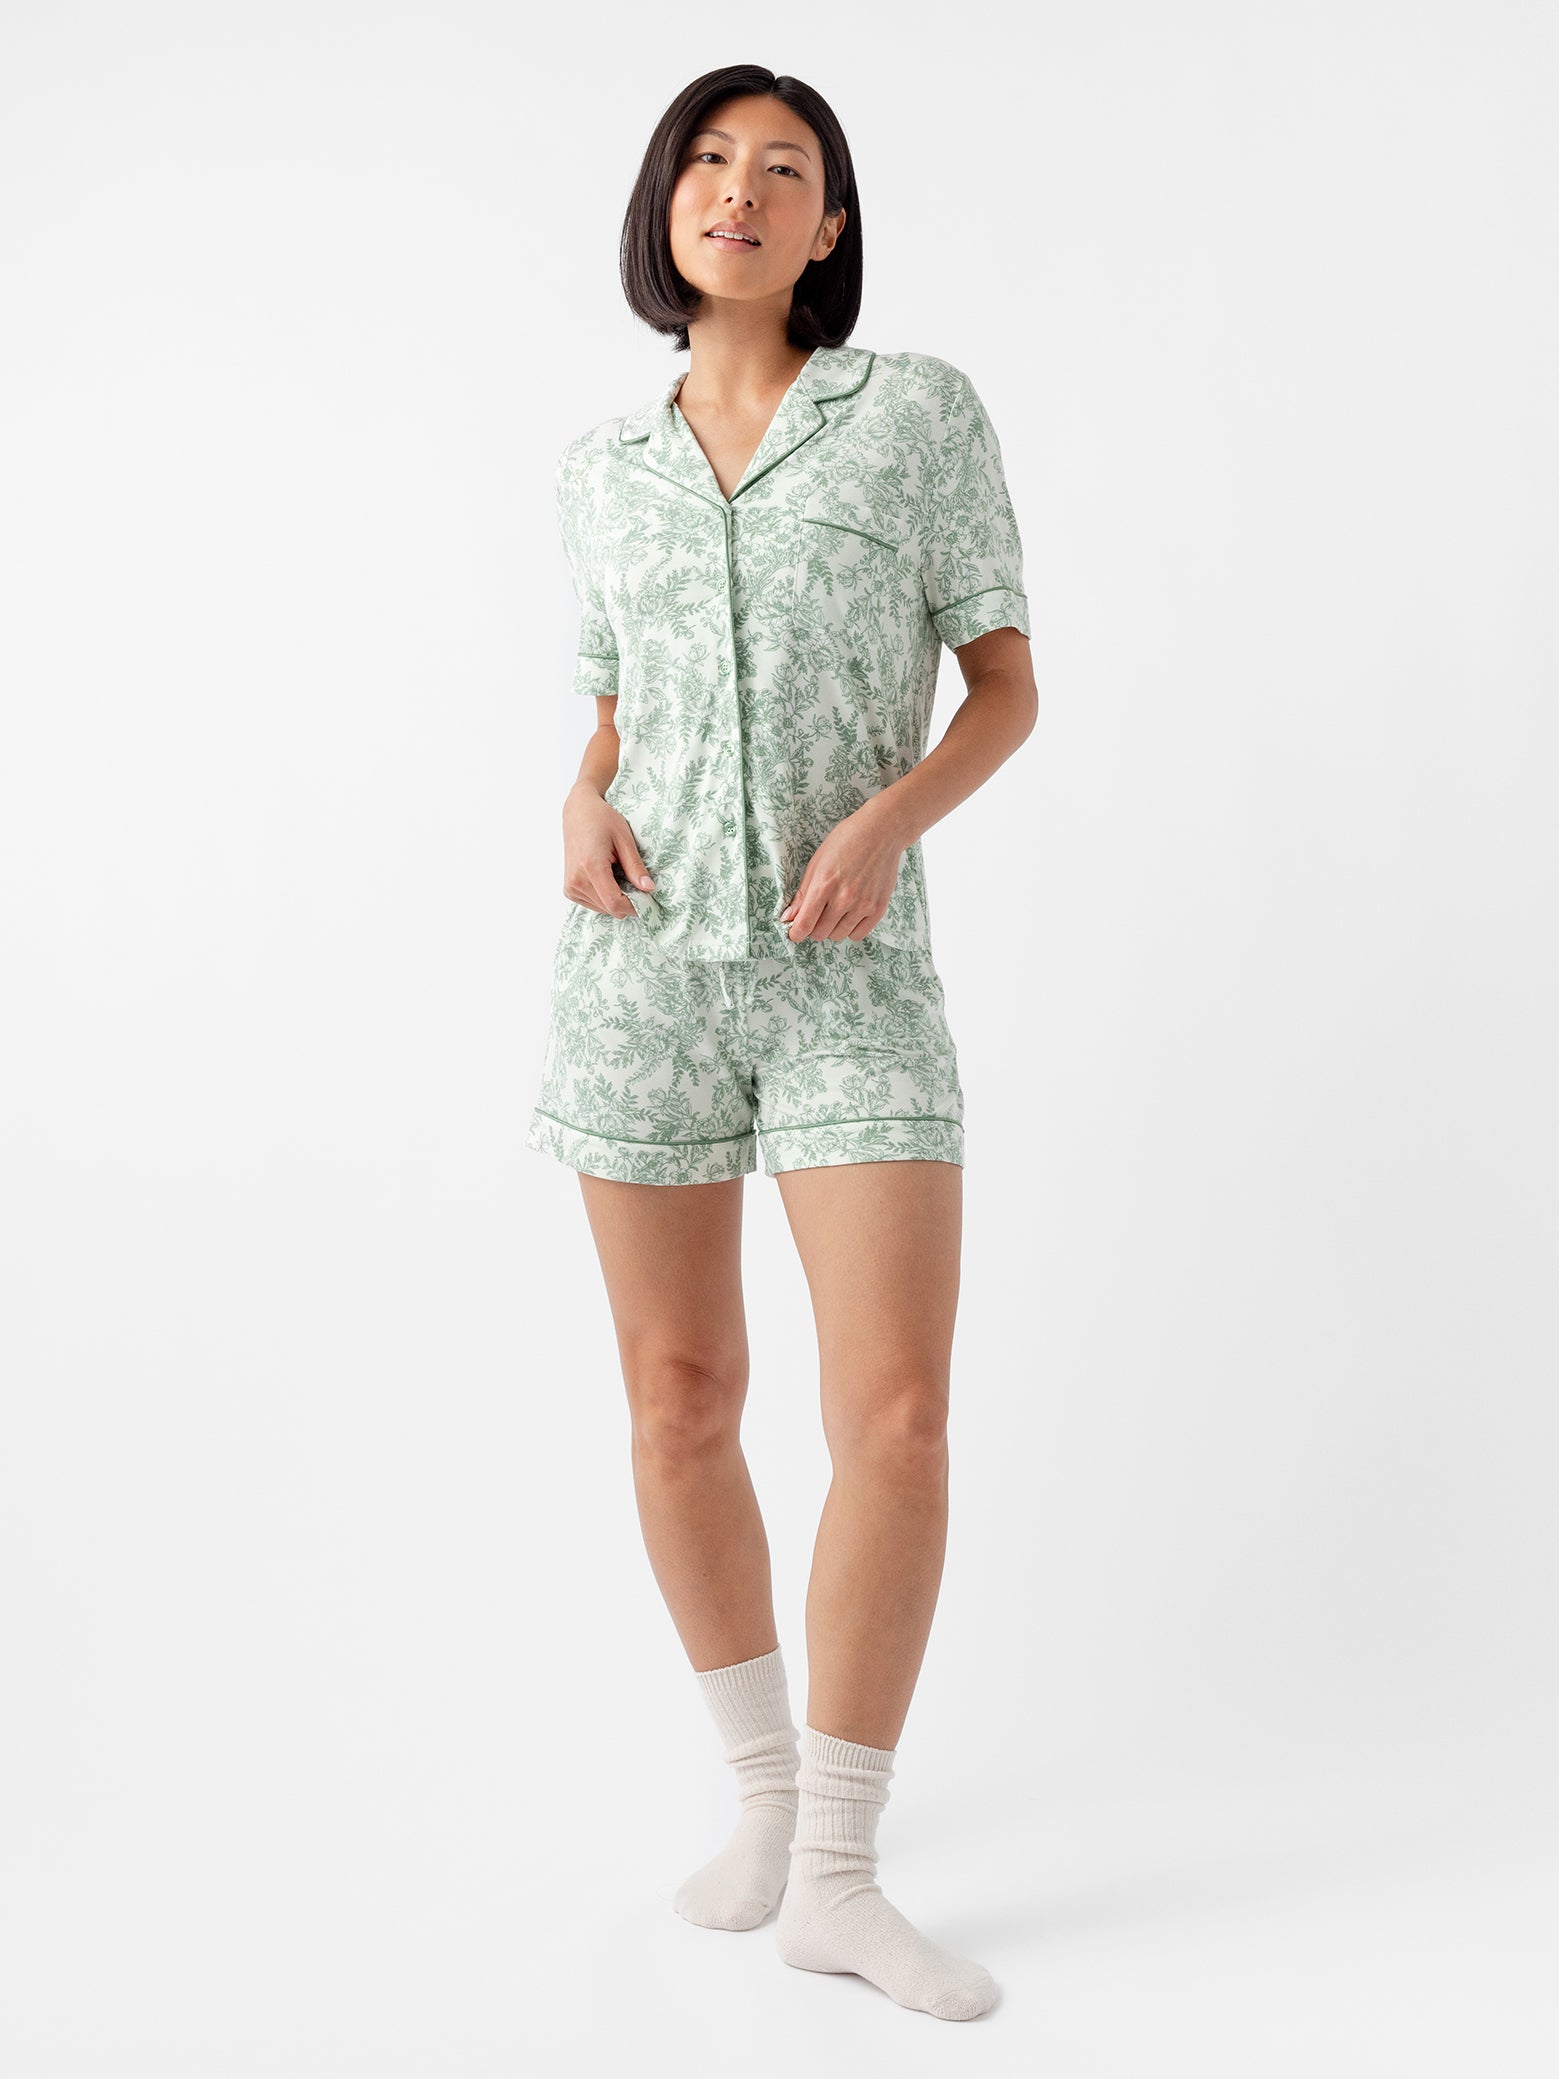 Woman wearing celadon toile short sleeve pajama set with white background 